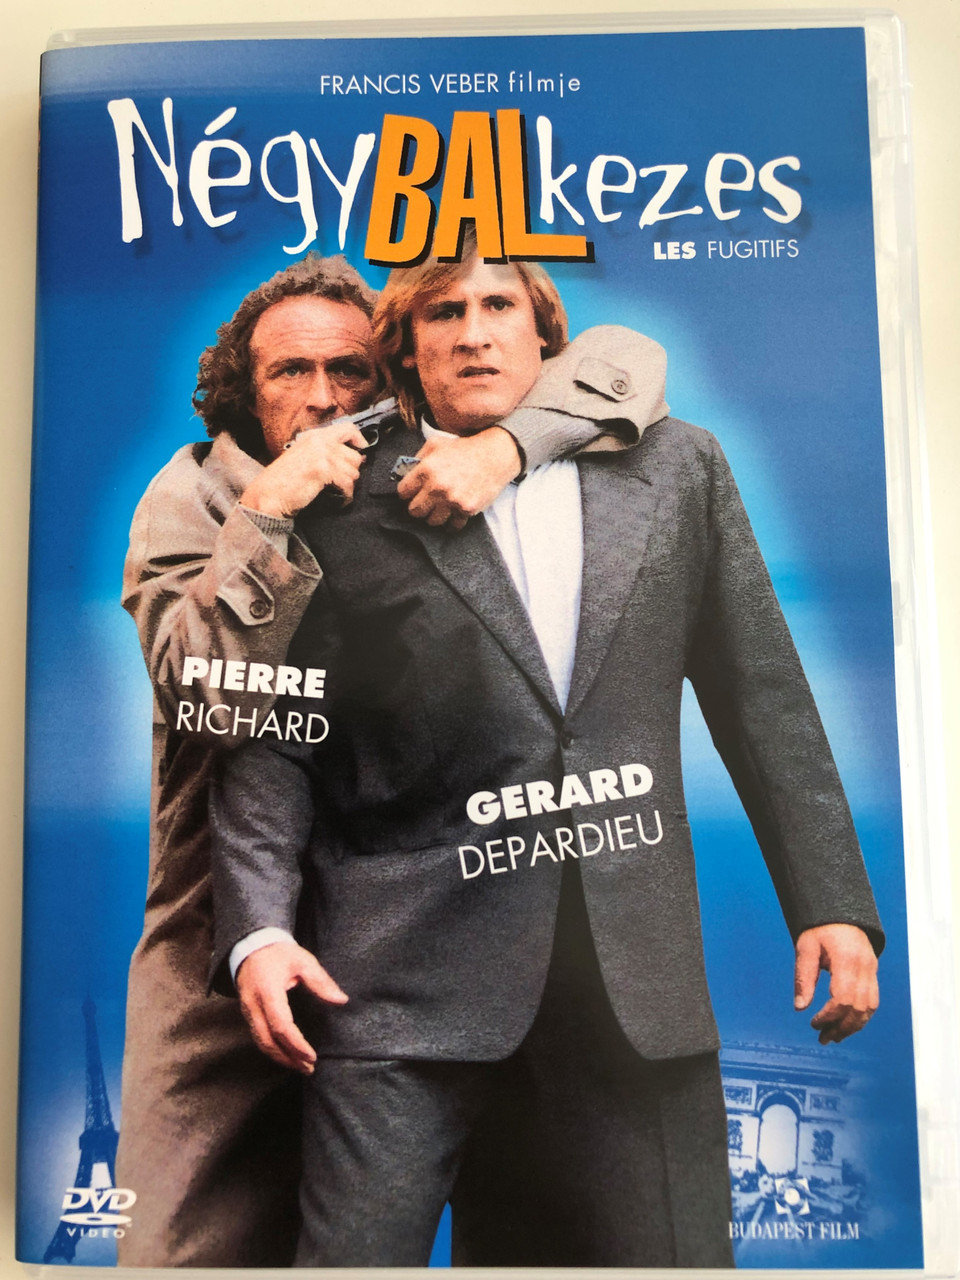 Les Fugitifs DVD 1986 Négy Balkezes / Directed by Francis Veber / Starring:  Pierre Richard, Gerard Depardieu - Bible in My Language